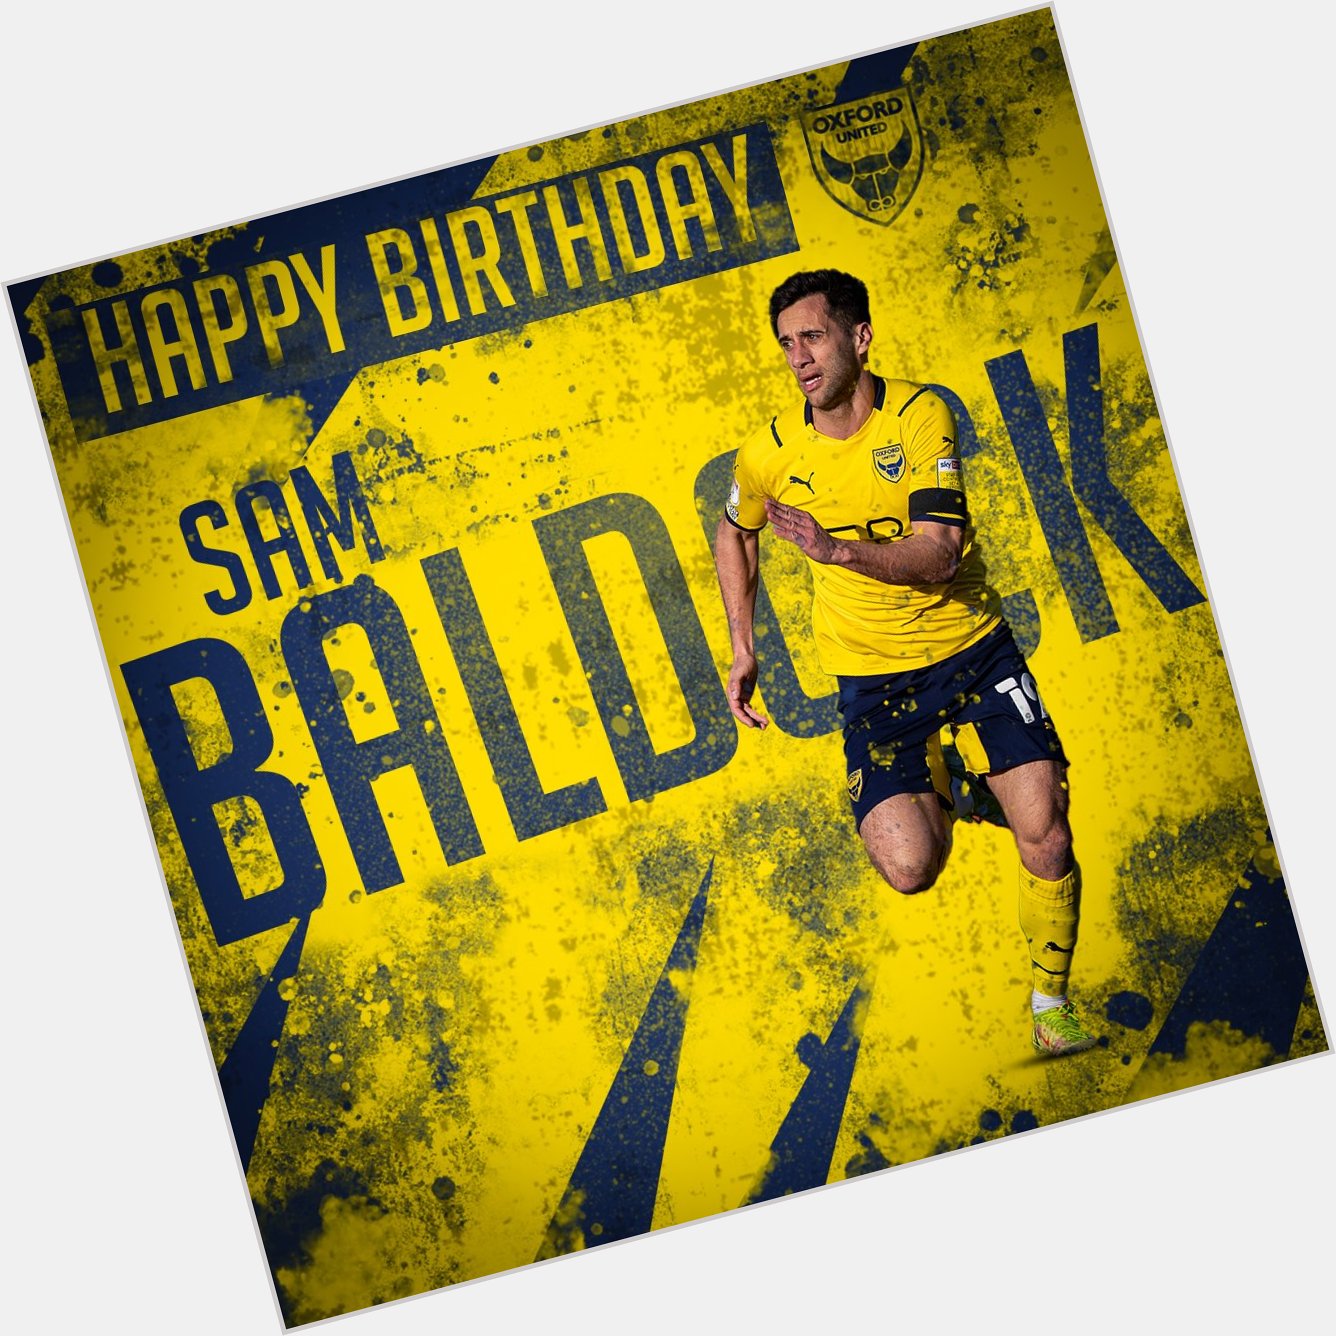 Wishing Sam Baldock a very happy birthday today!     | 